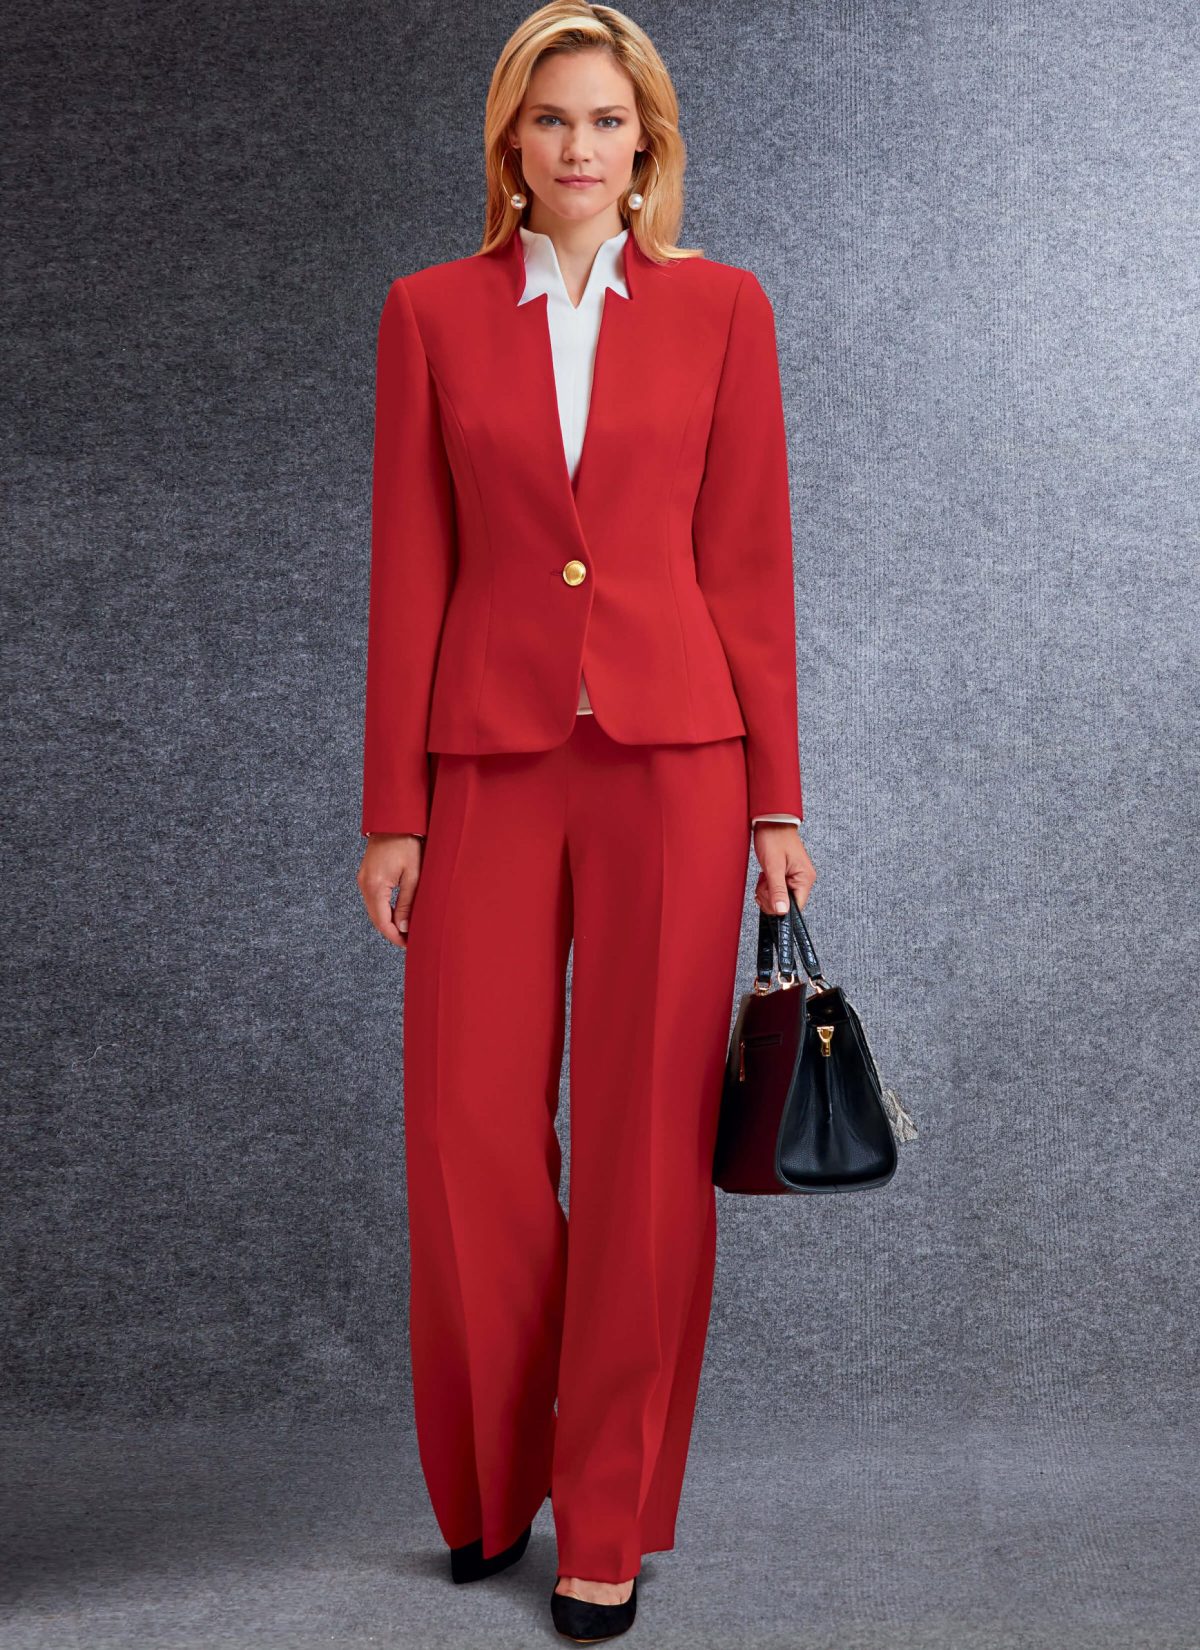 Vogue Patterns V1741 Misses' Jacket, Top, Dress, Trousers and Jumpsuit